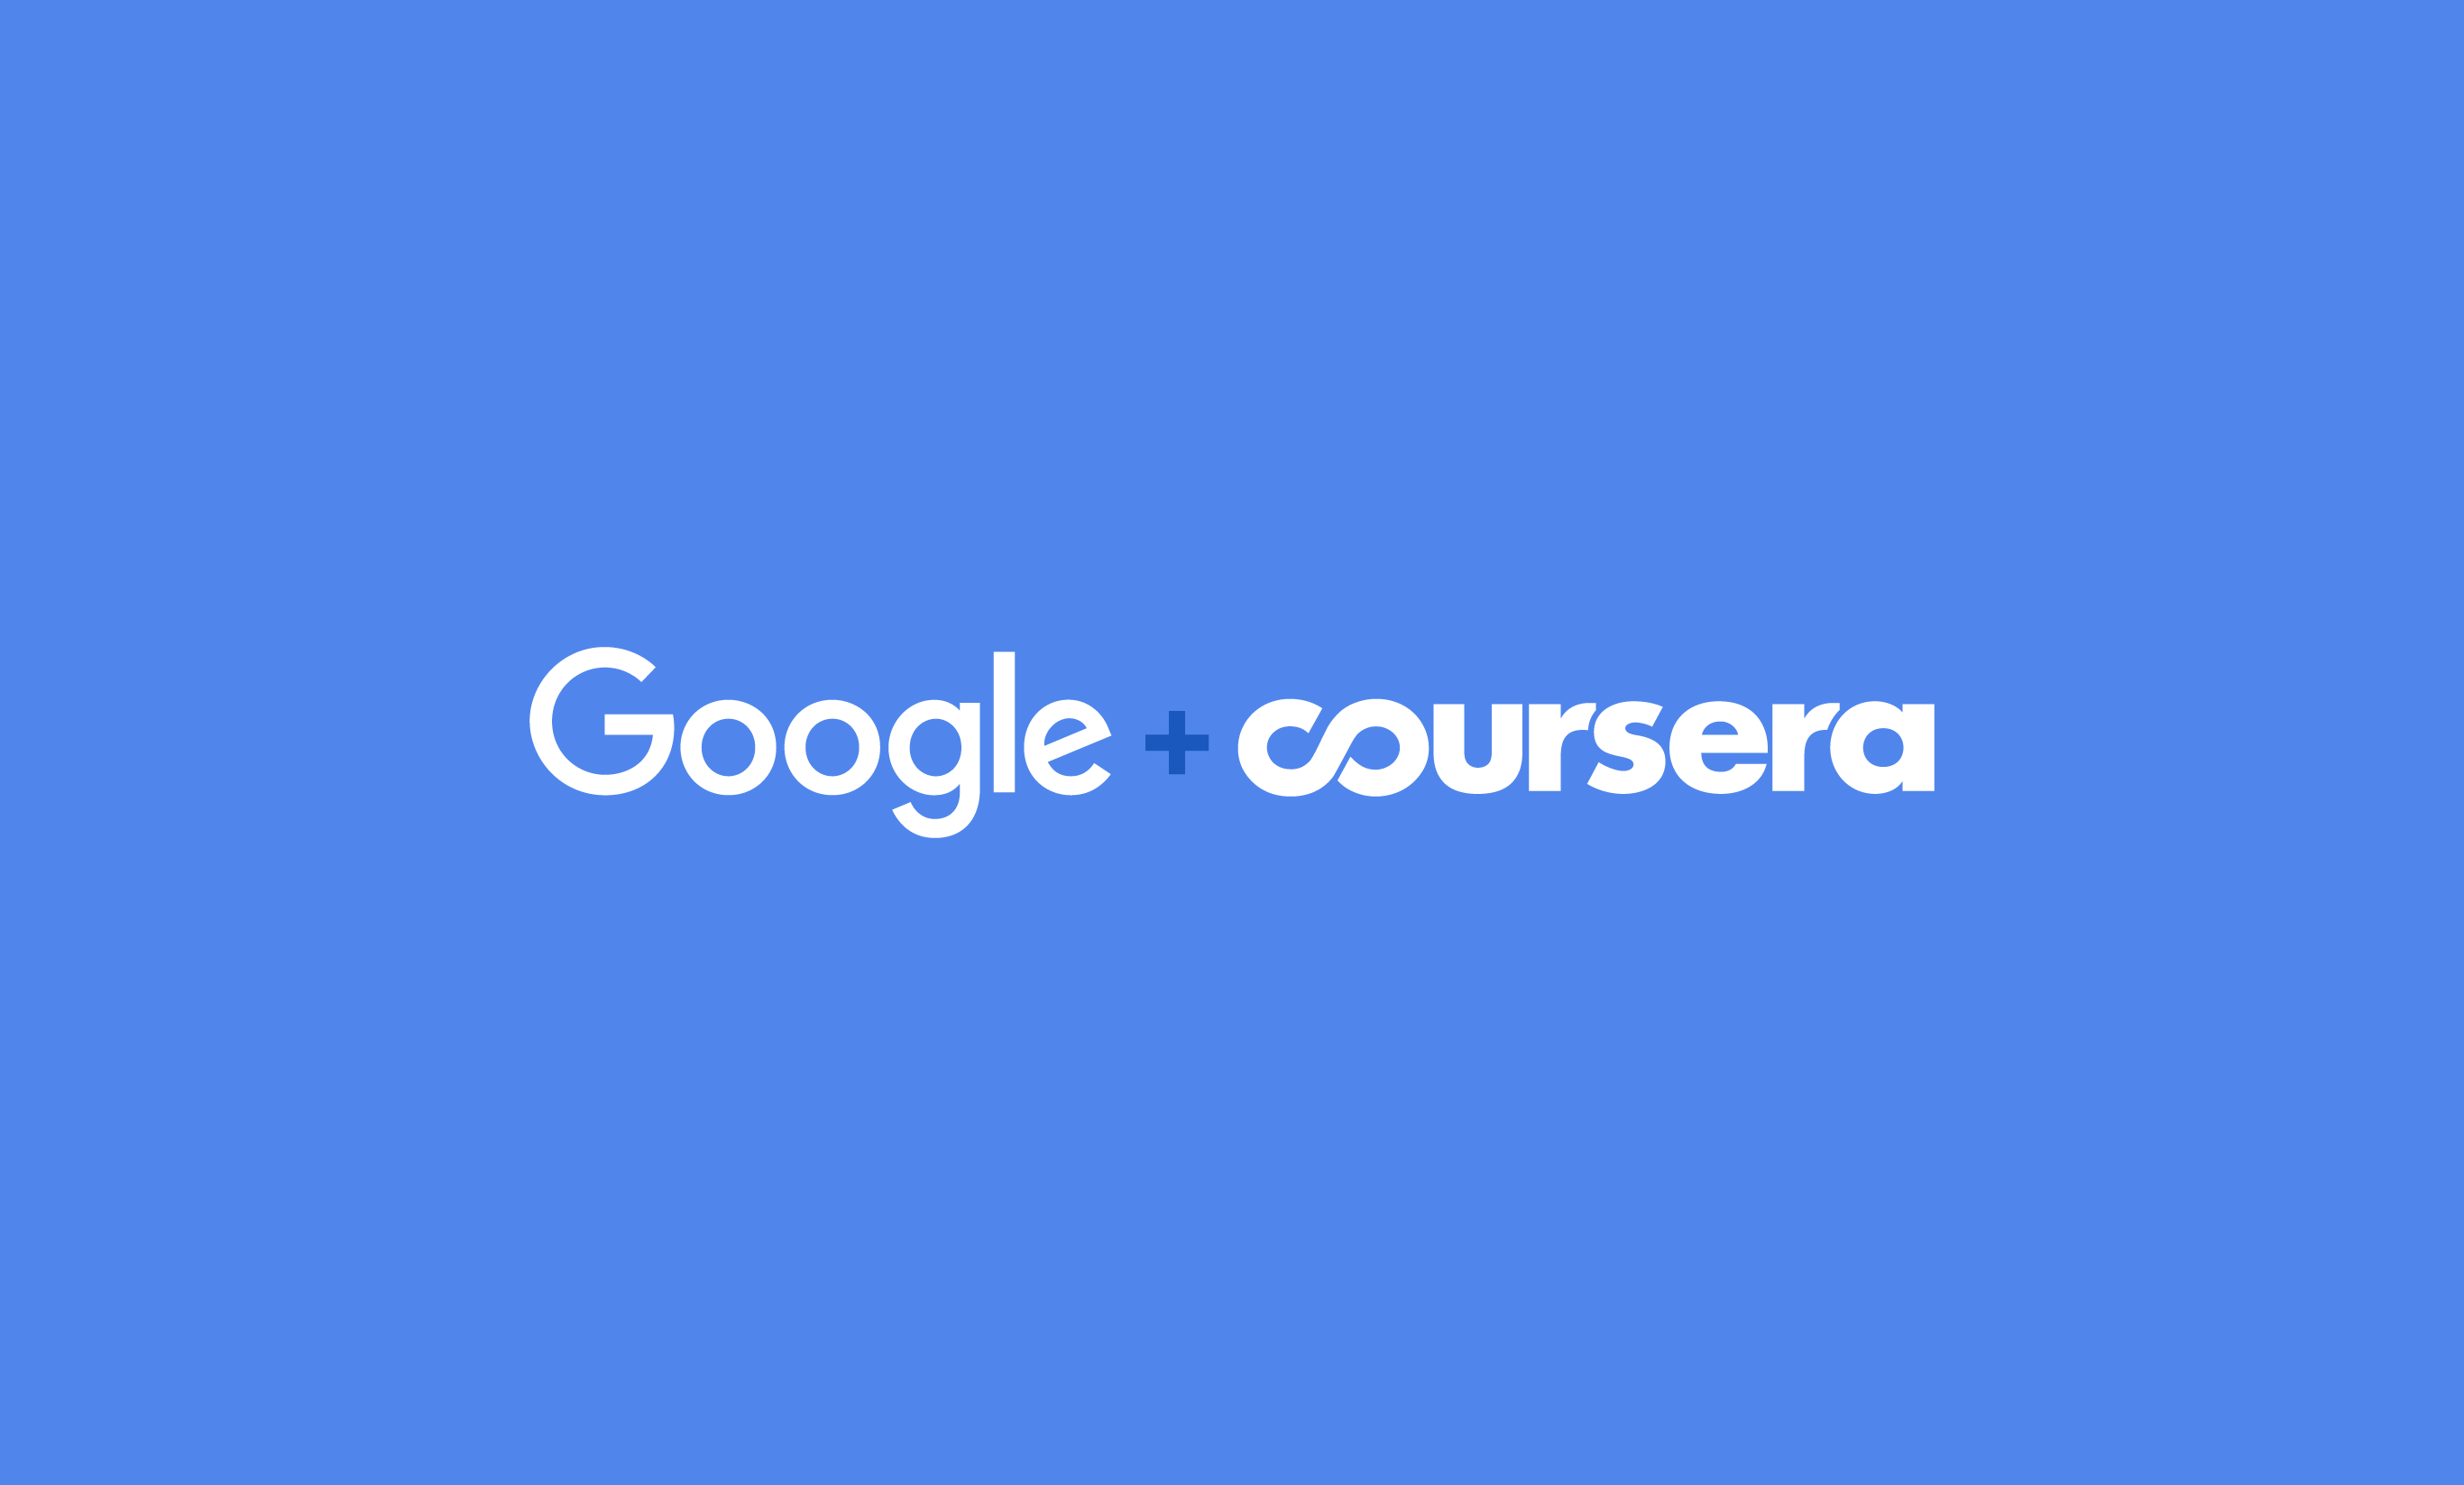 Google + Coursera